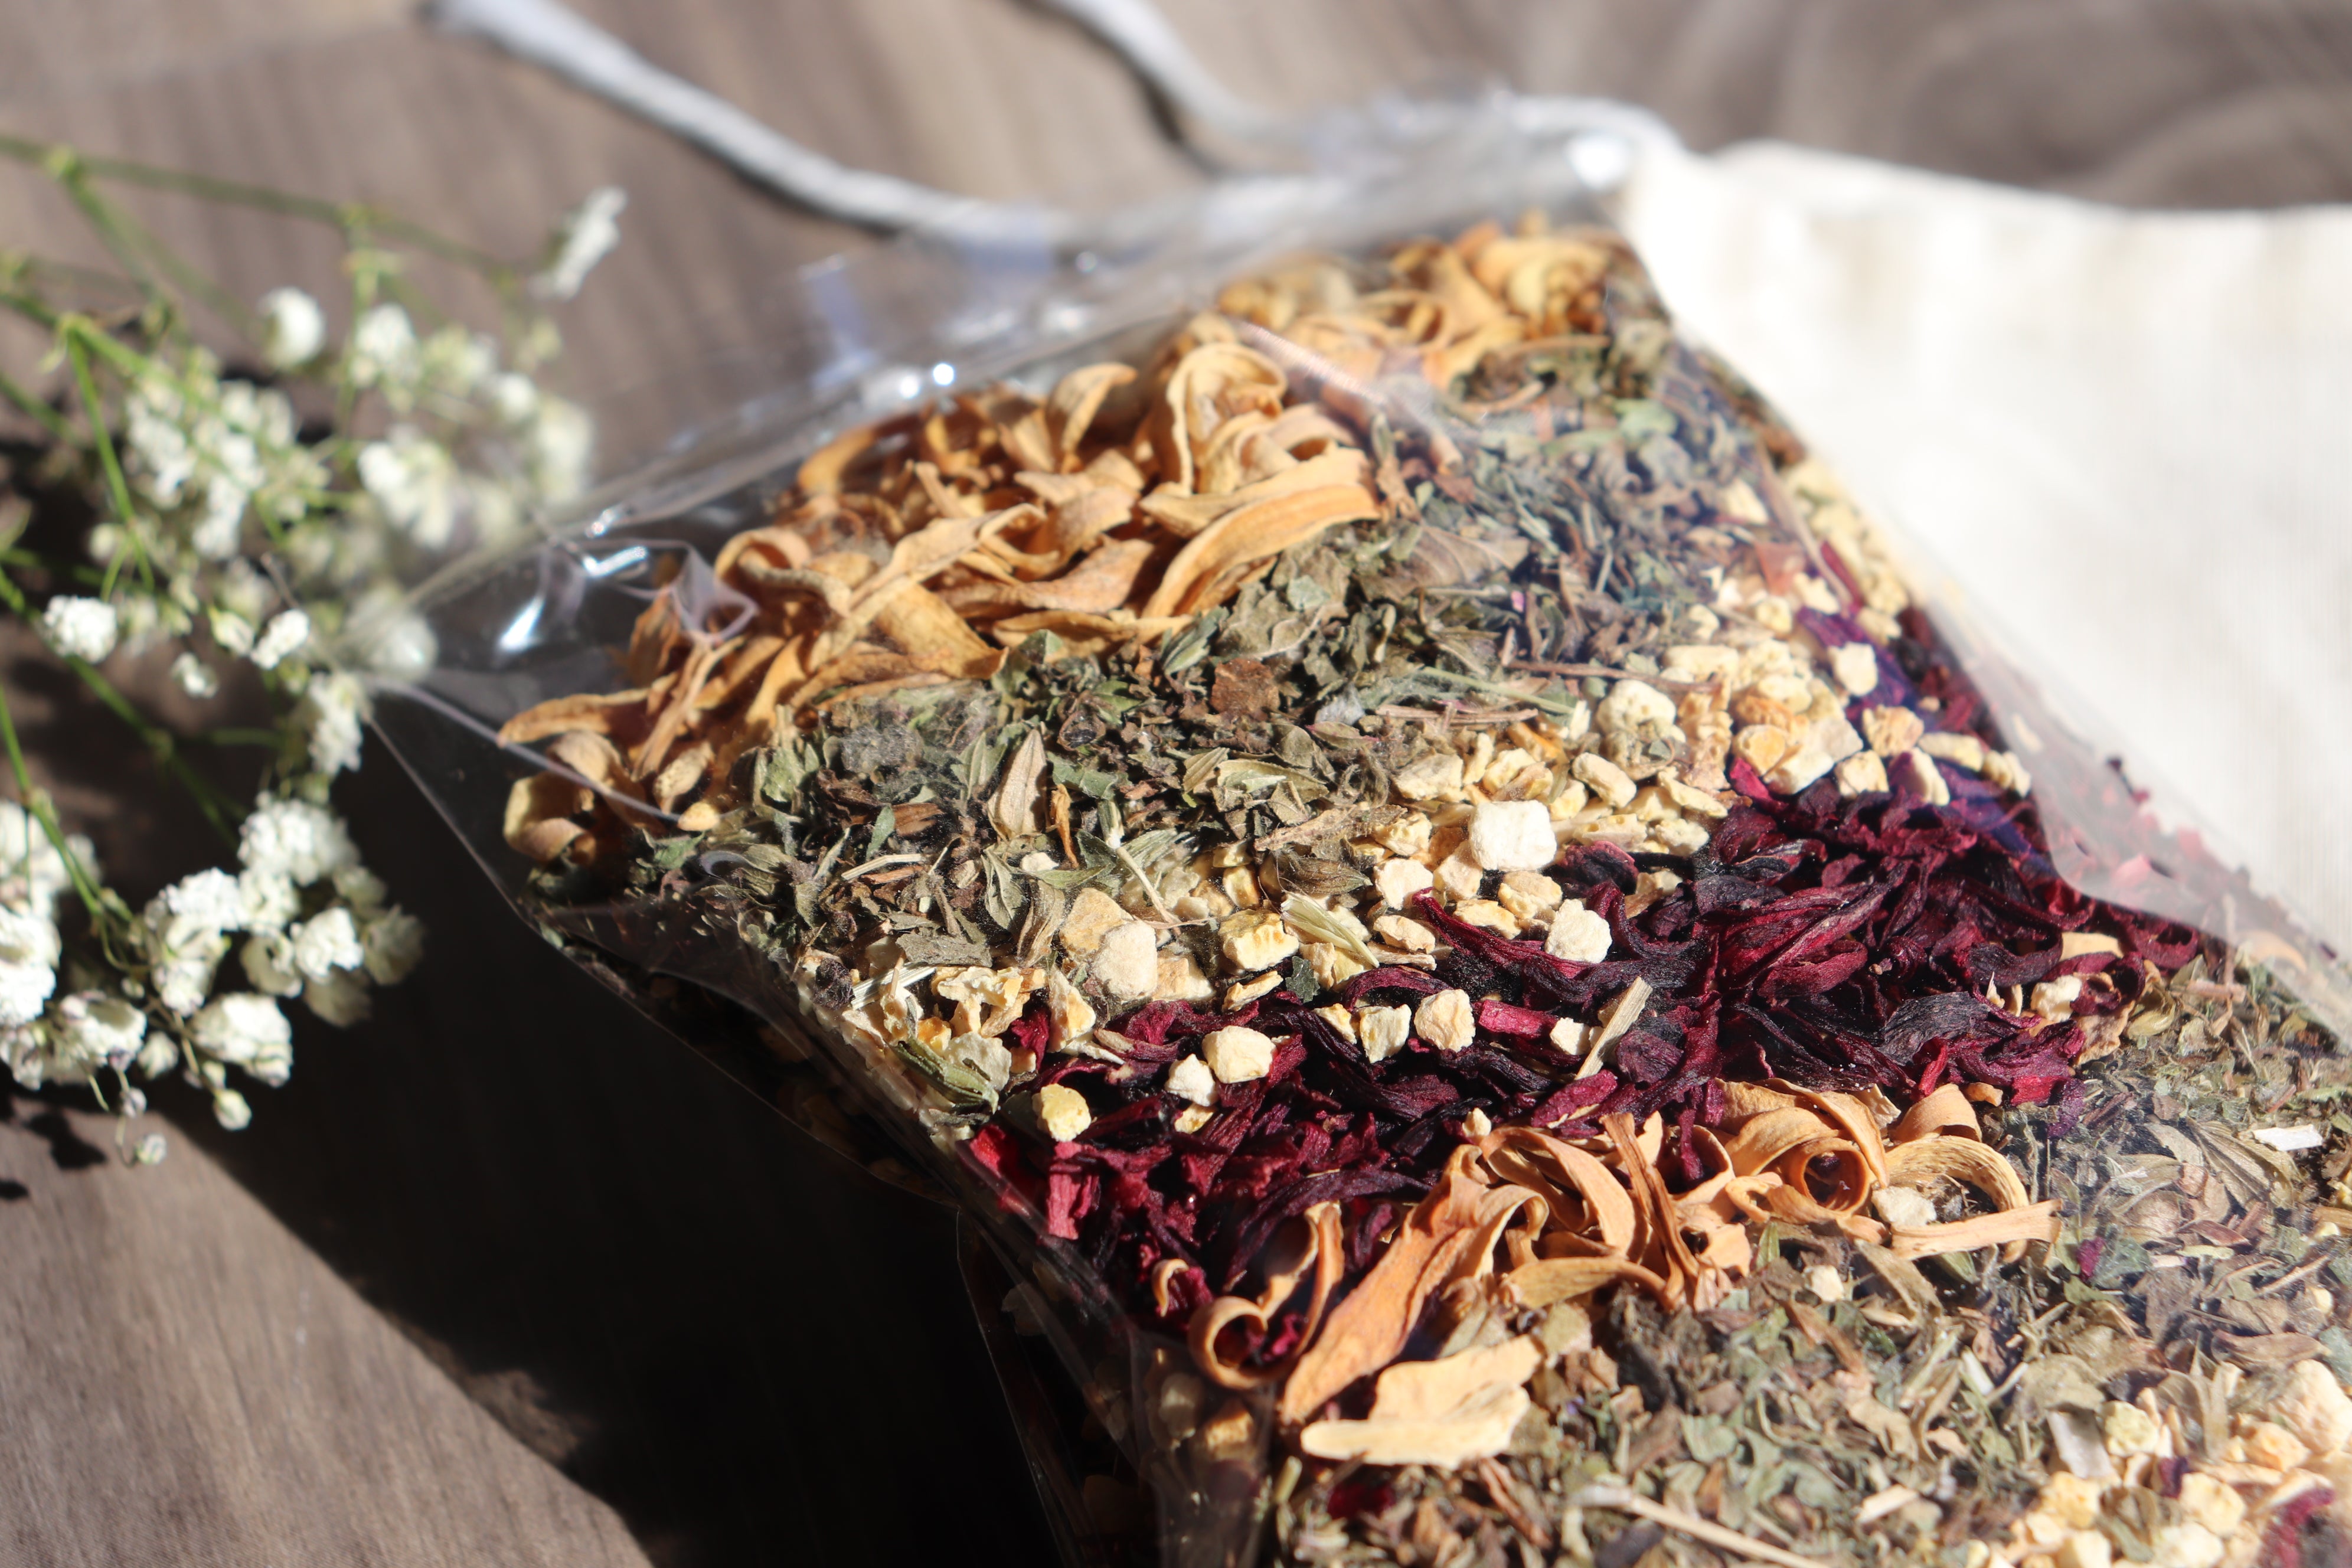 The Essentials Kit - Organic Bath & Tea, Ebi